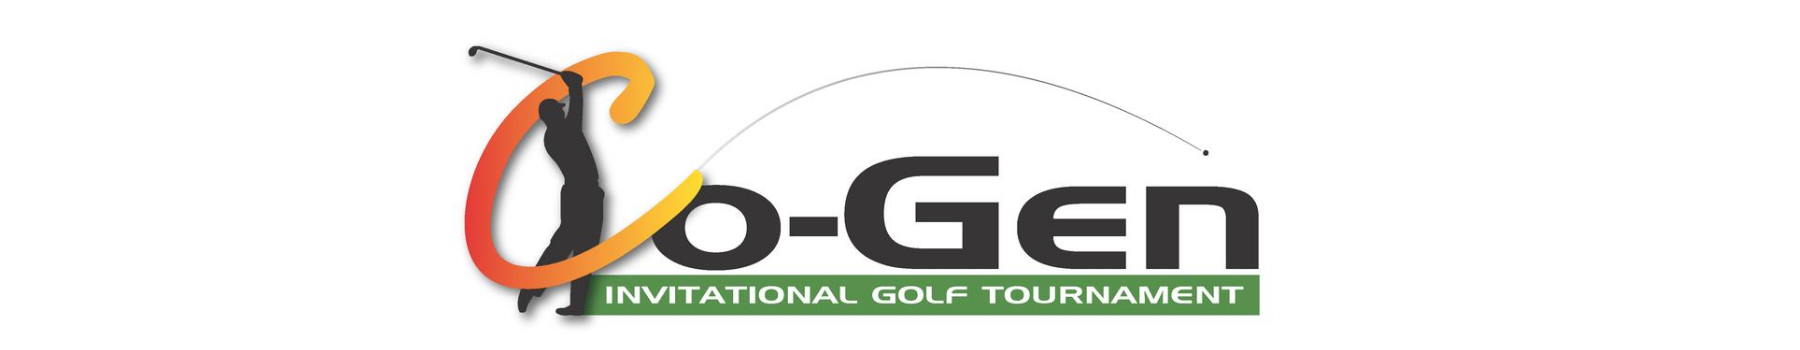 Co-Gen Invitational Golf Tournament